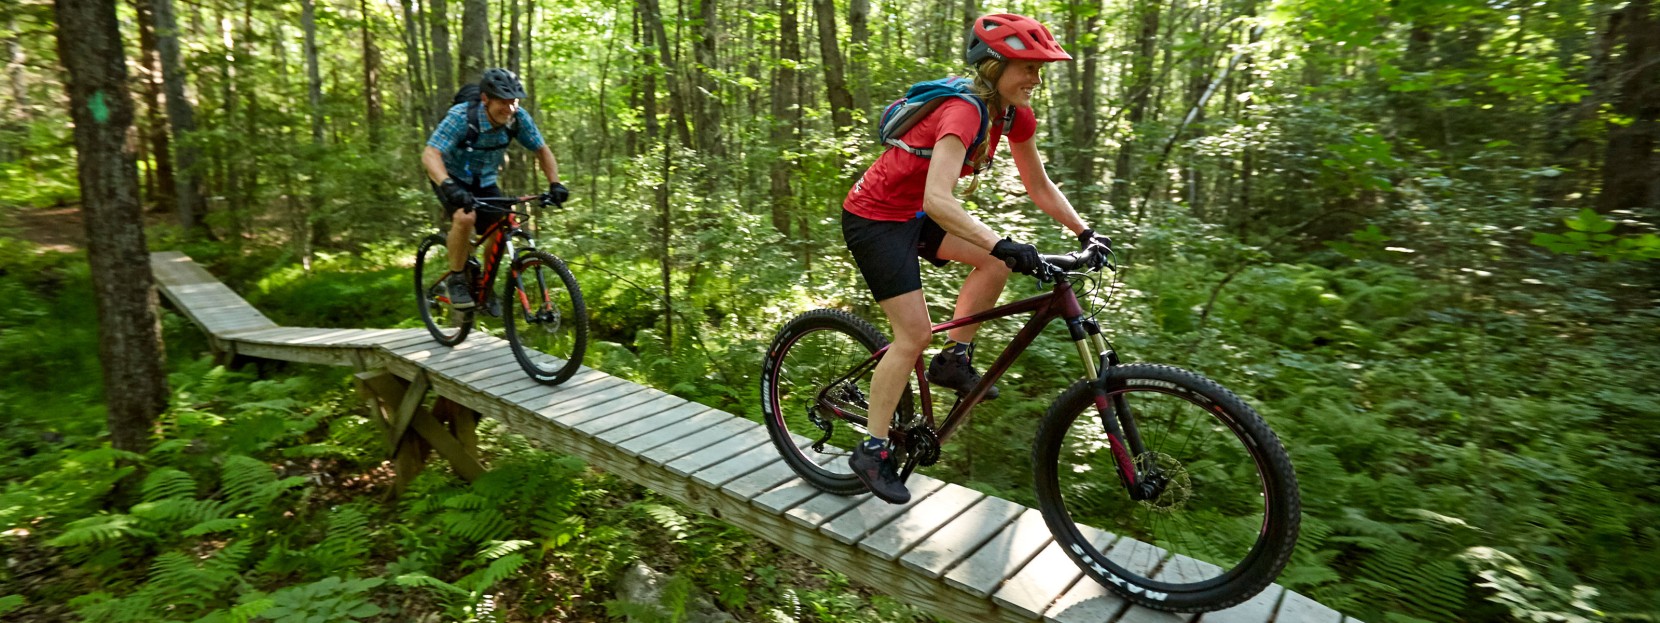 2 mountain bikers riding across a raised boardwalk in the woods.